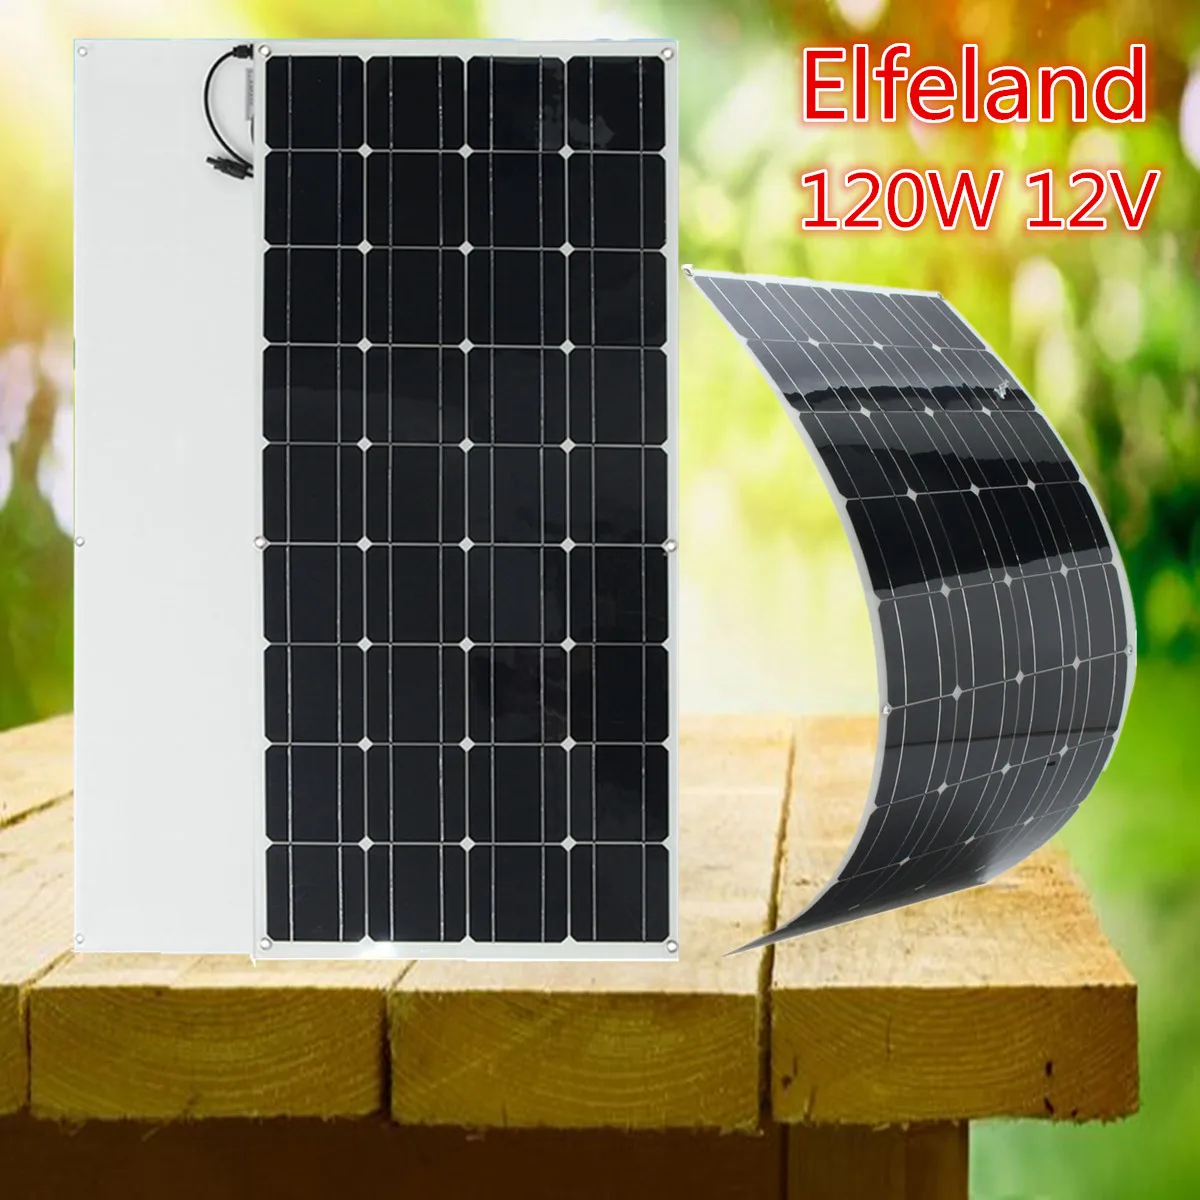 

2PCS Elfeland SP-36 12V 120W Monocrystalline Semi-flexible Solar Panel With 1.5m Cable High conversion Light weight